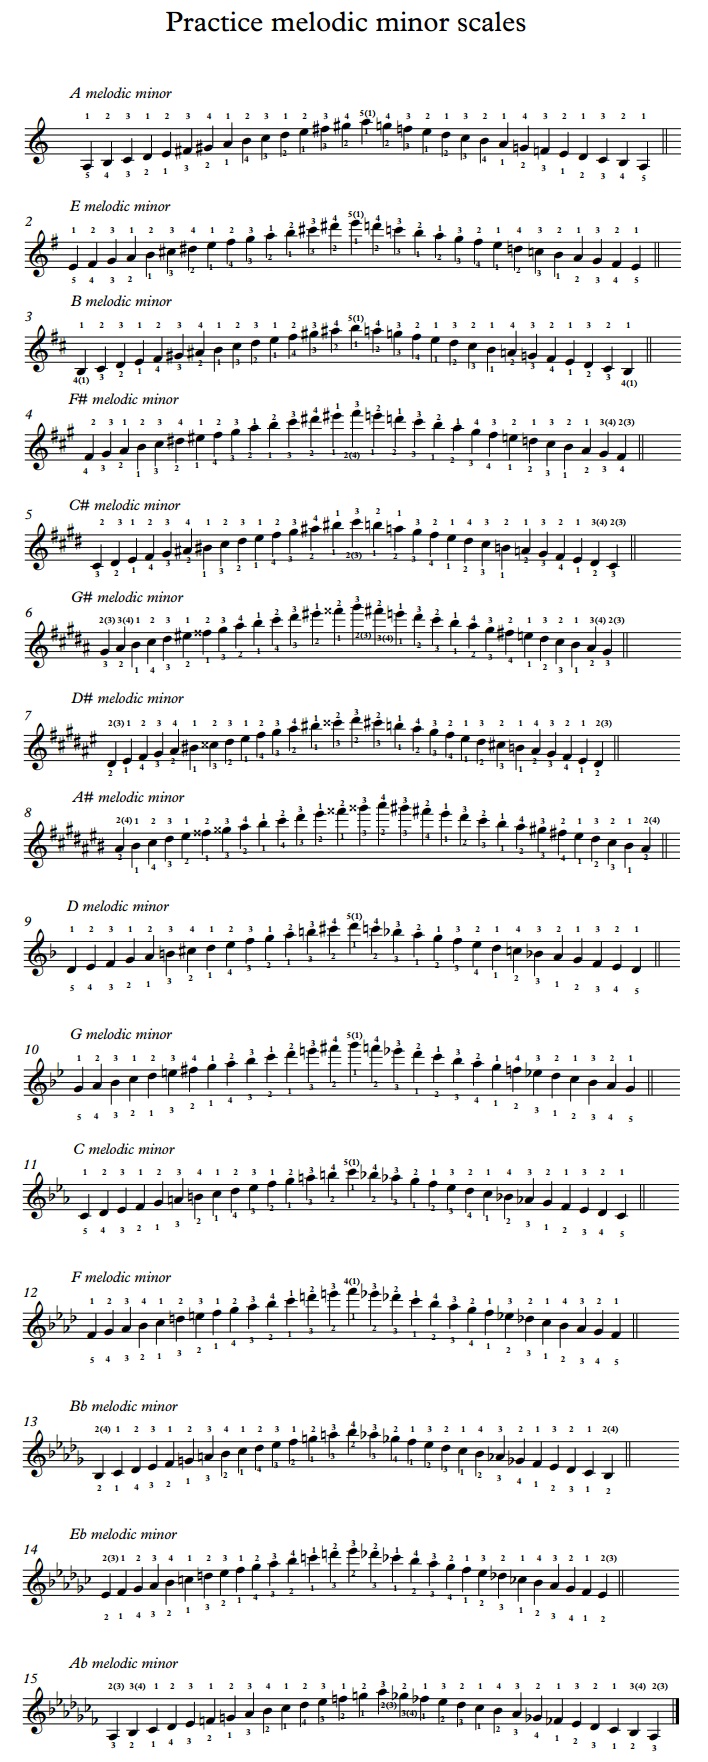 Practice melodic minor scales1.jpg